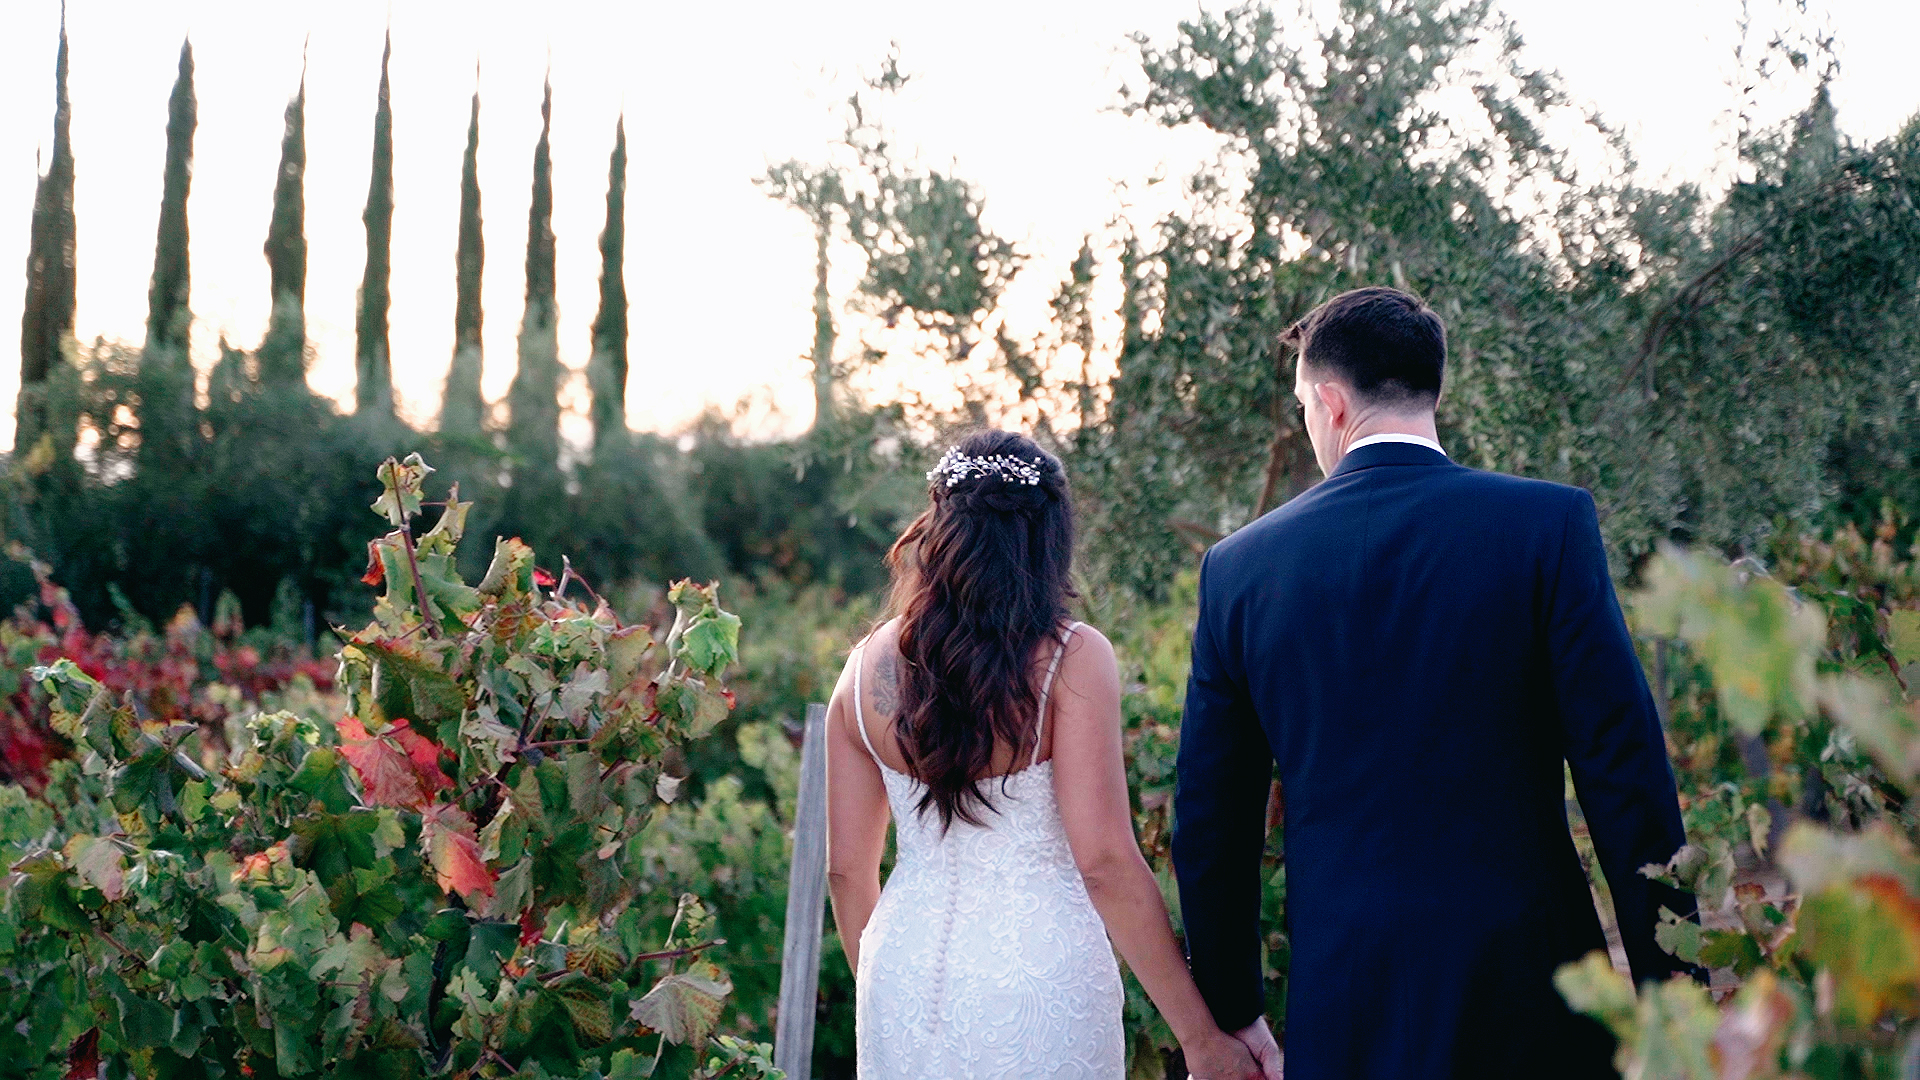 Mount Palomar Winery Wedding | Temecula wedding venue | Wedding video by Southern California wedding videographer The Siren & Co